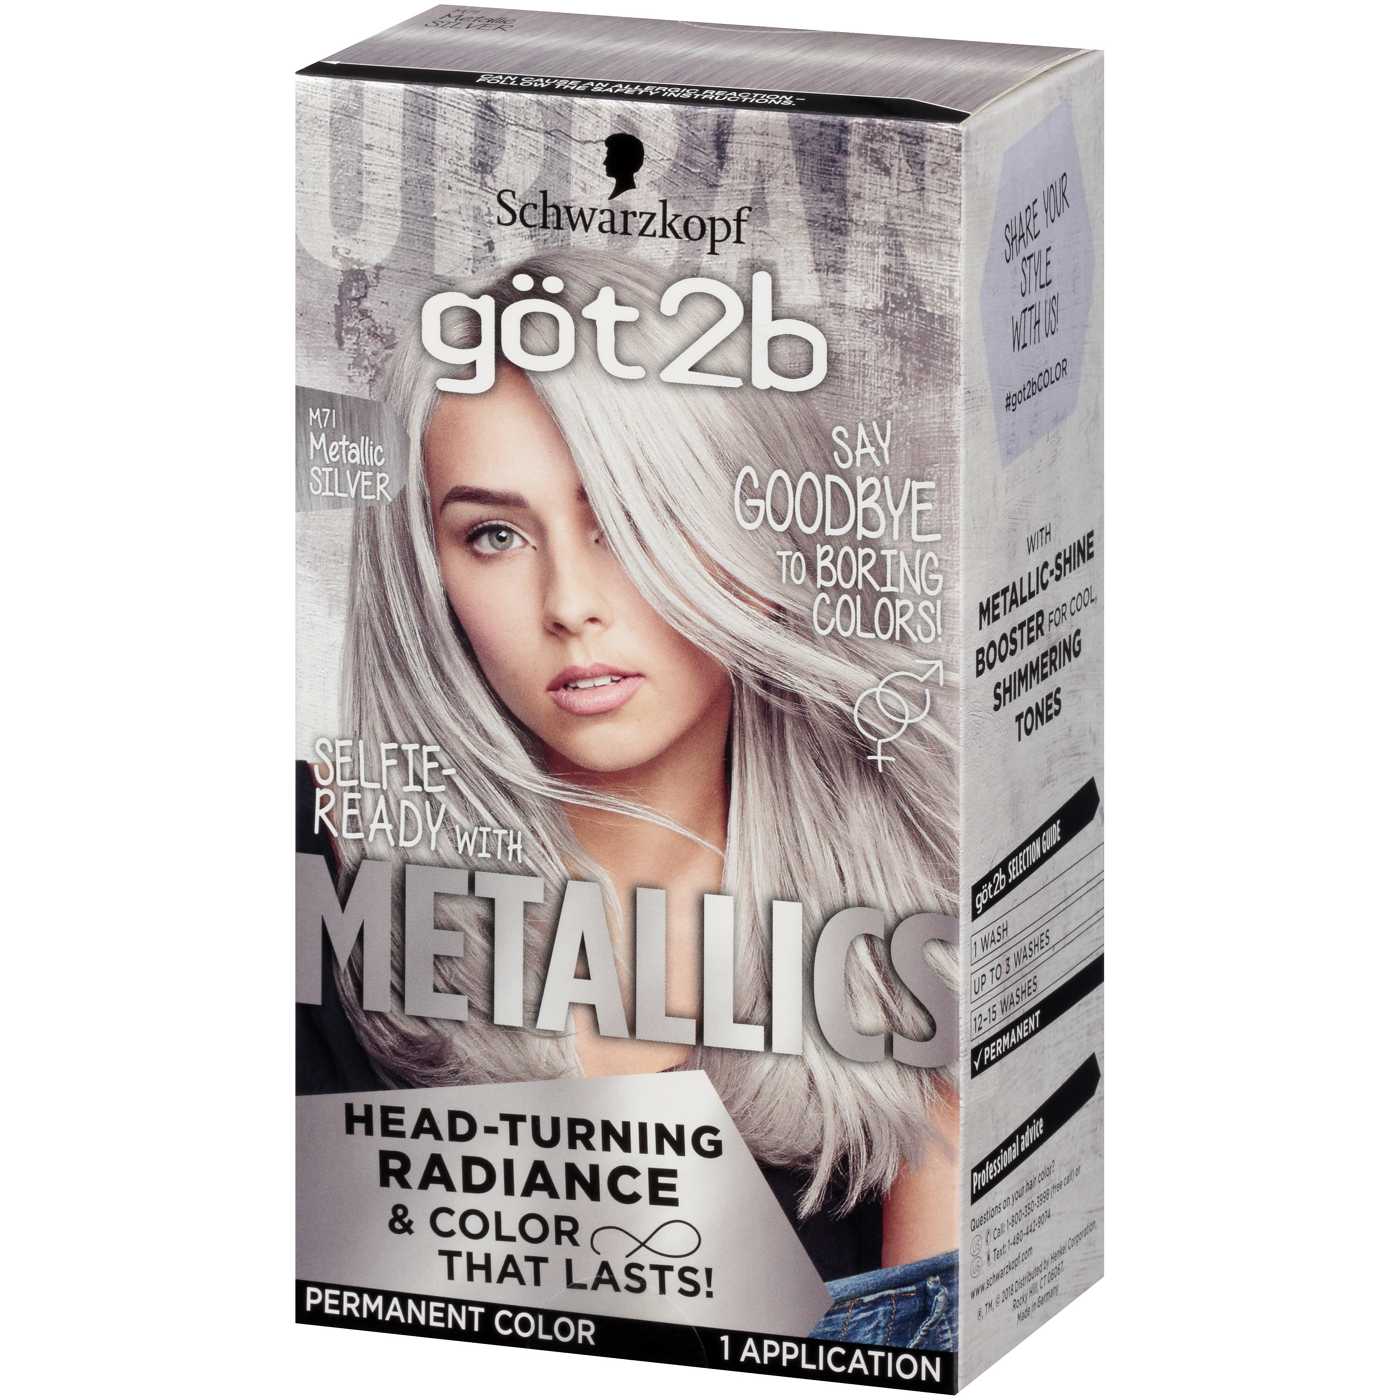 Got2b Metallics Permanent Hair Color, M71 Metallics Silver; image 4 of 4